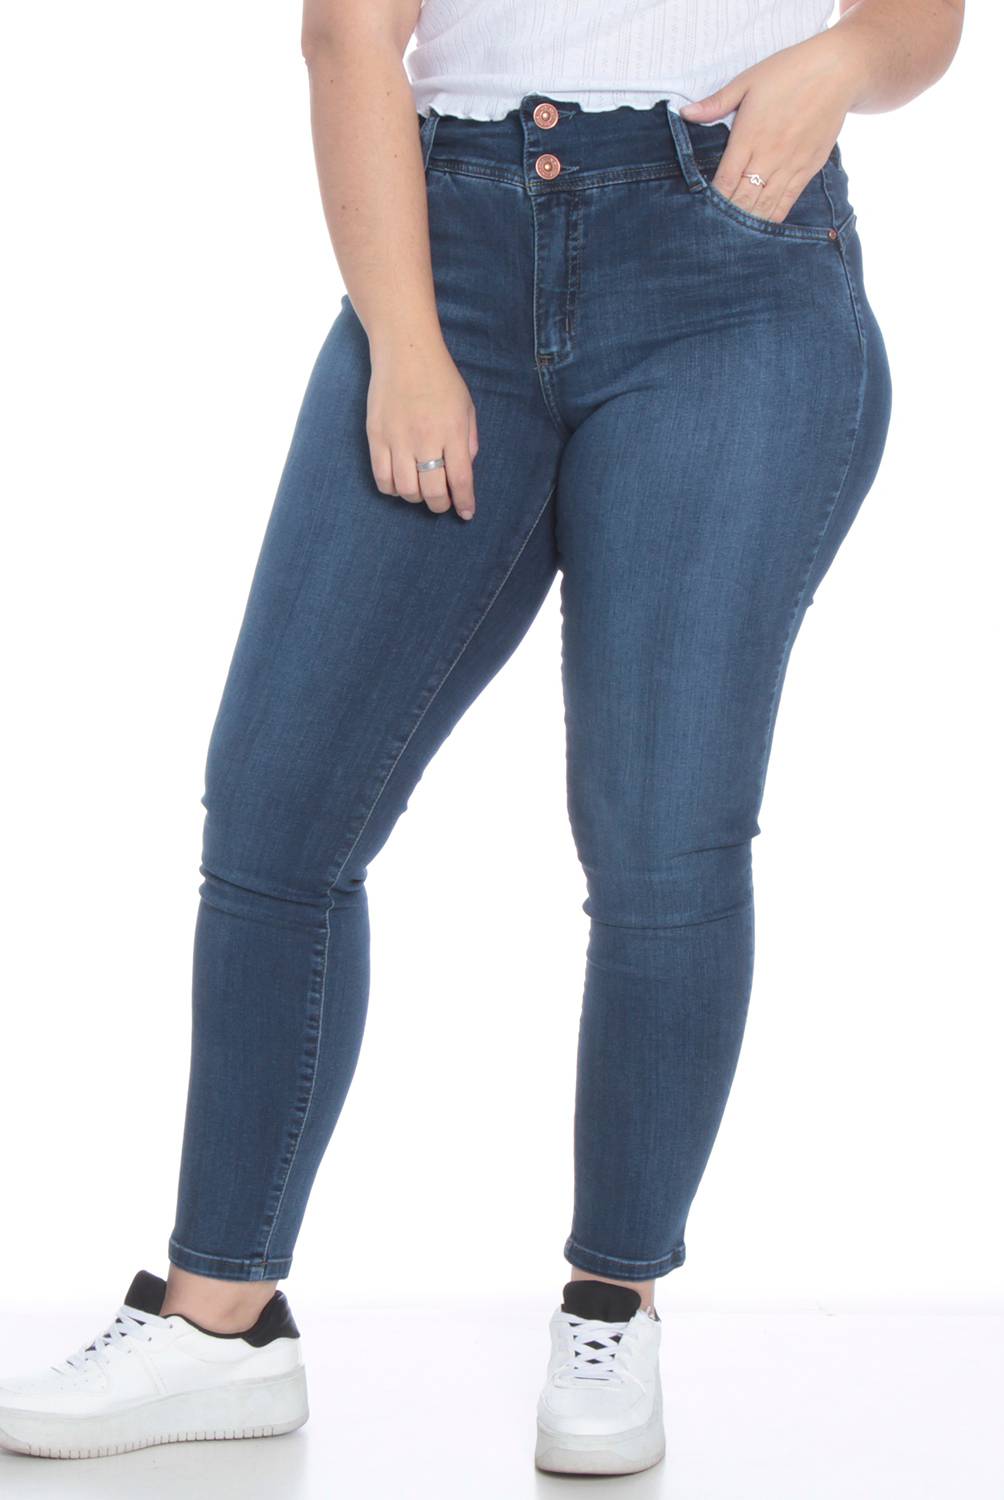 WADOS Jeans Skinny Tiro Alto Mujer Wados